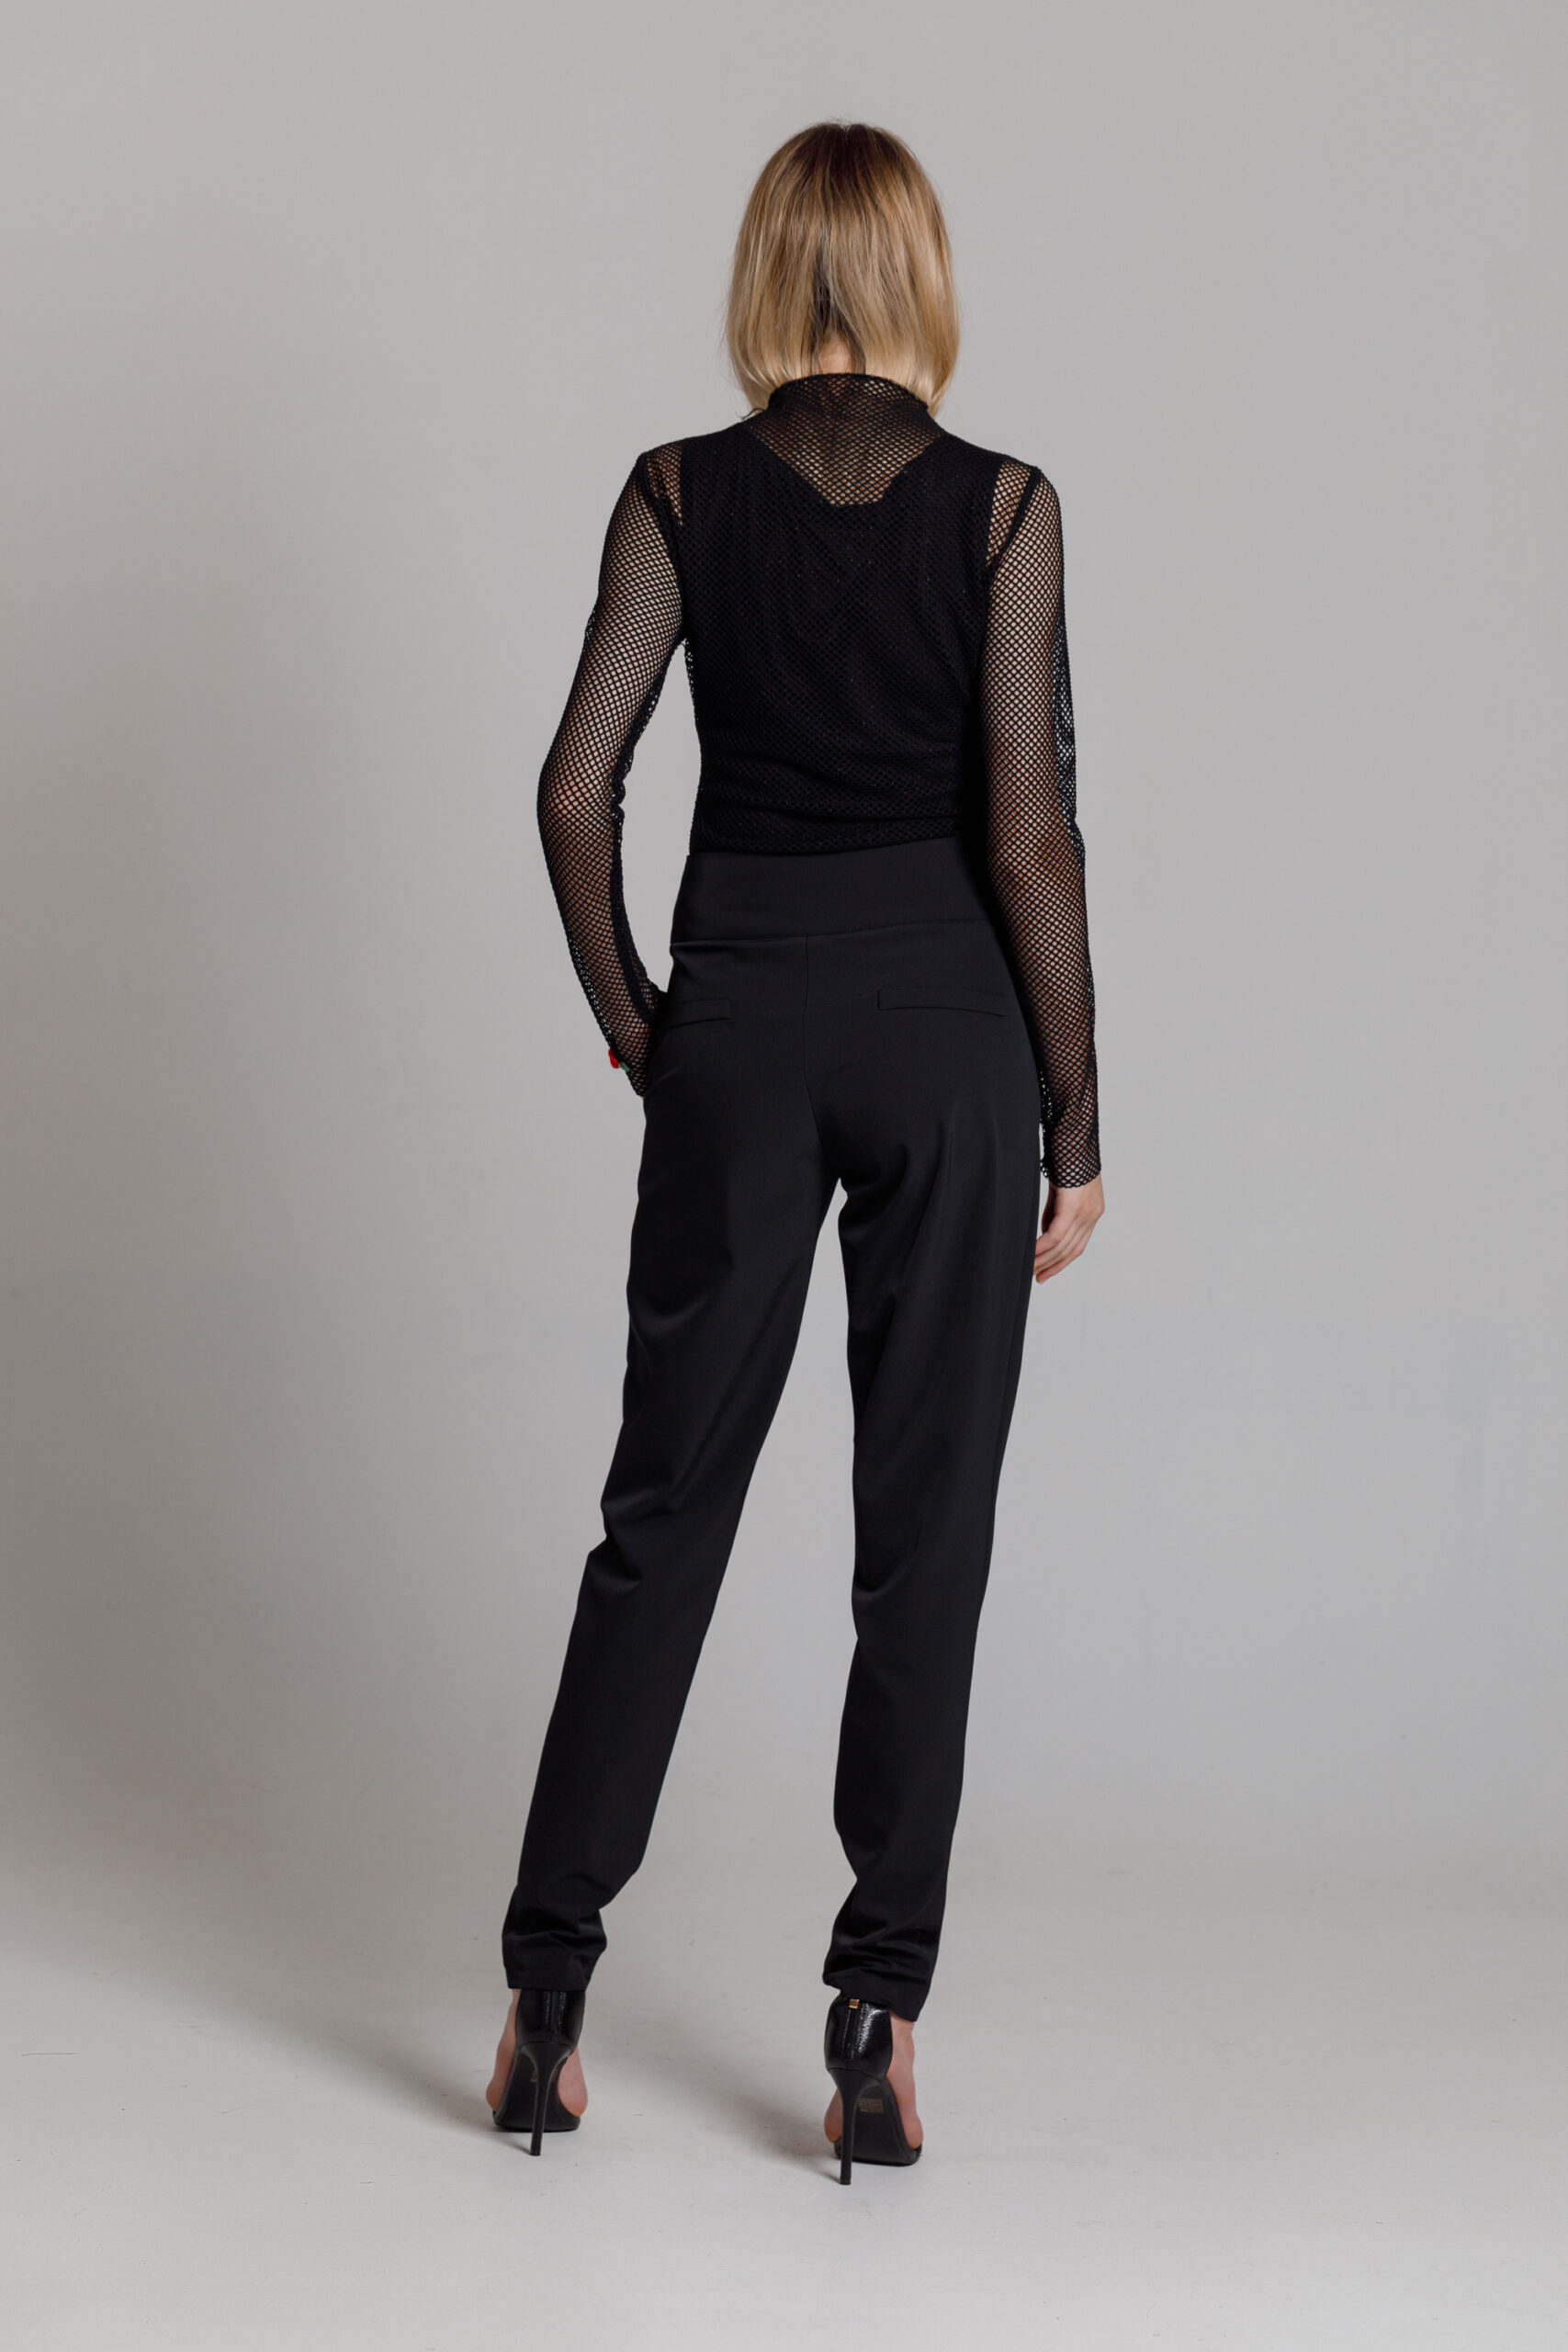 Pantalon LEONARD elegant negru. Materiale naturale, design unicat, cu broderie si aplicatii handmade